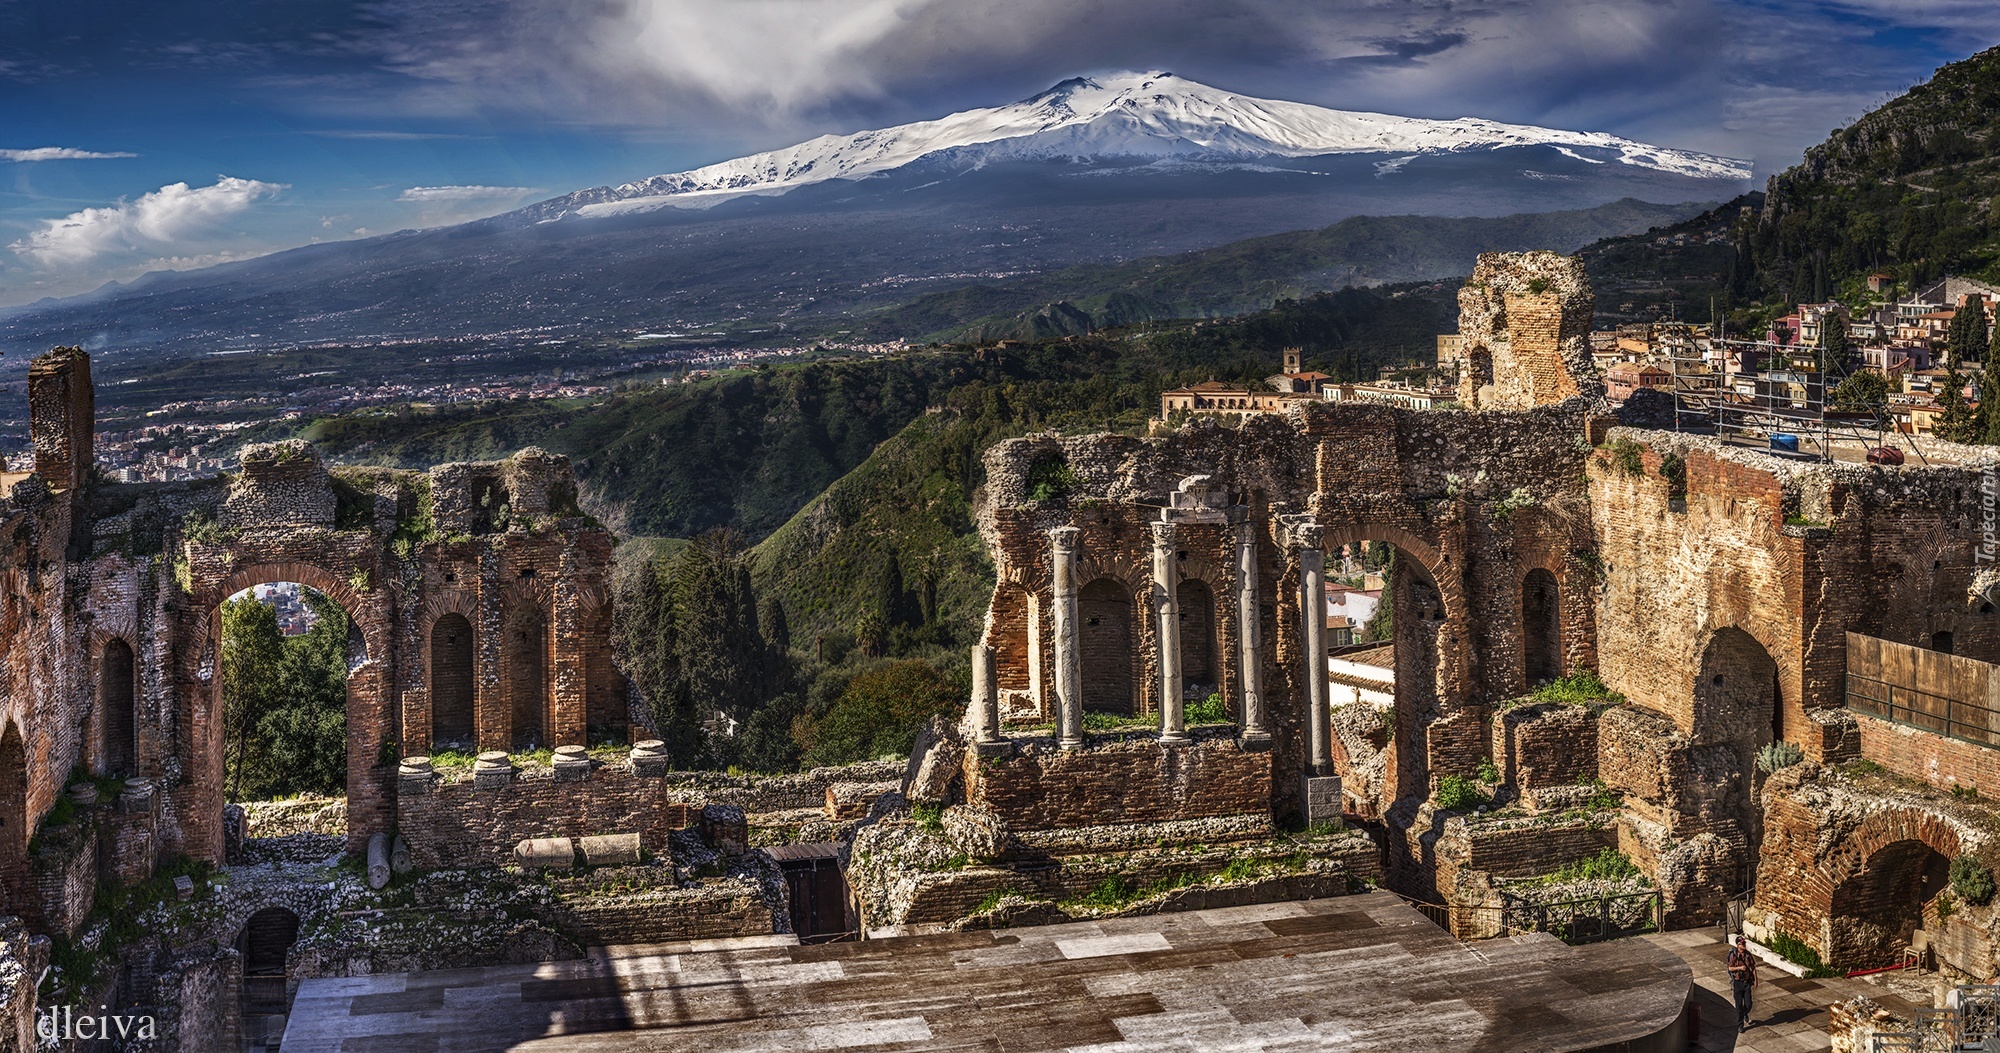 Włochy, Sycylia, Góry, Lasy, Ruiny, Teatru